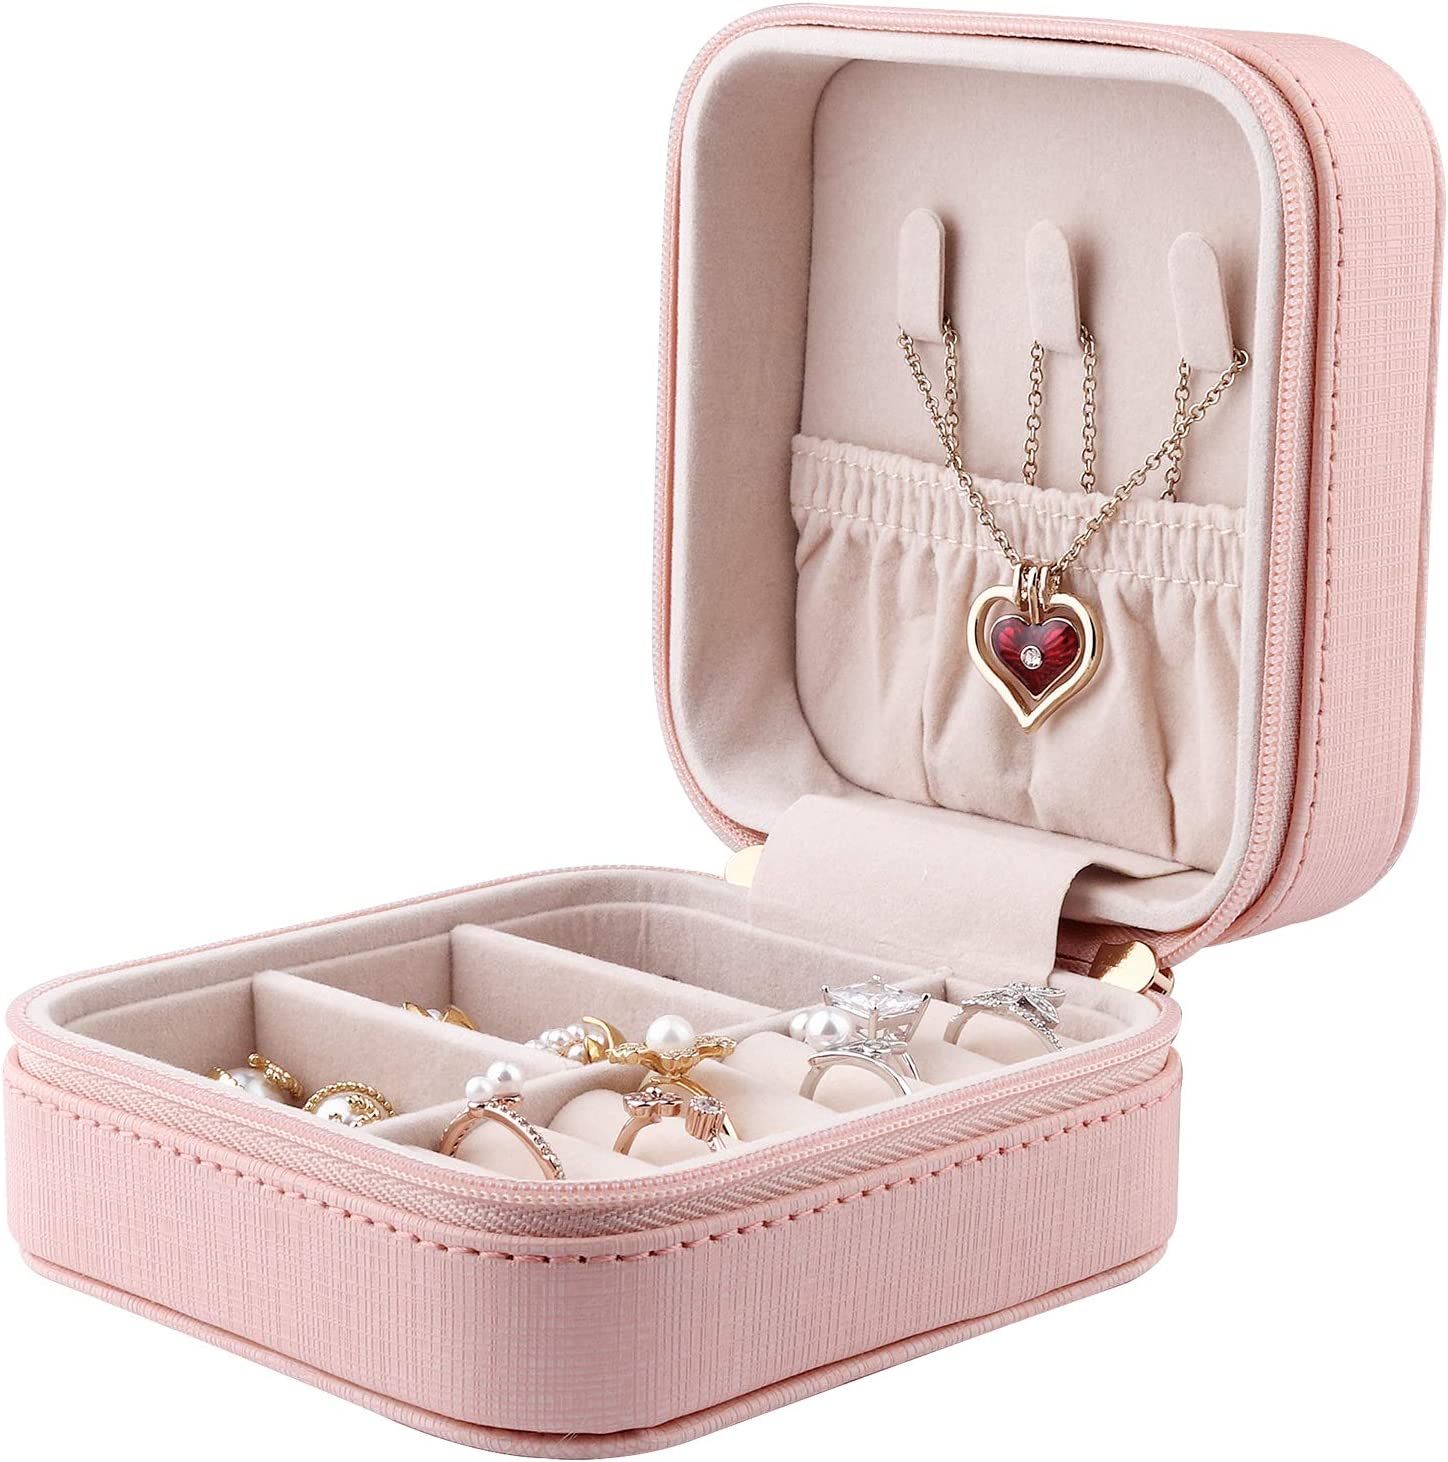 pink jewelry box with jewelry